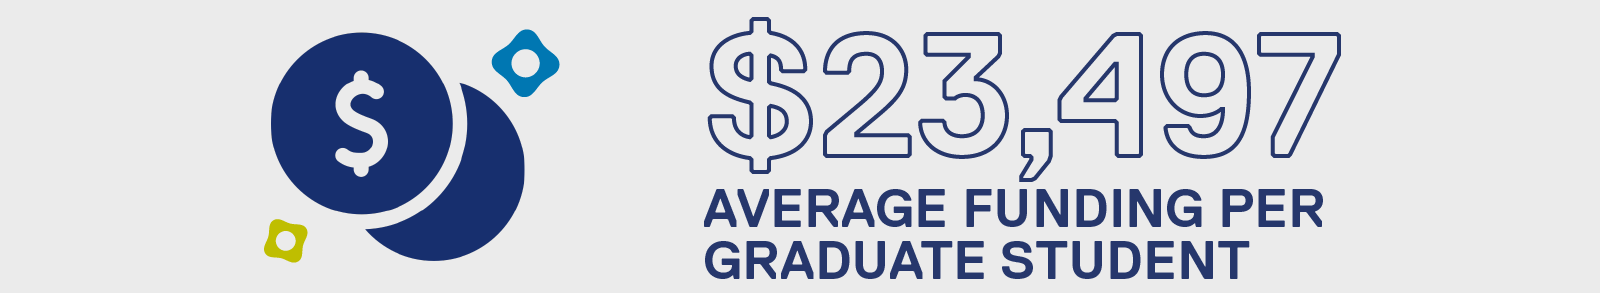 23497 average funding per graduate student